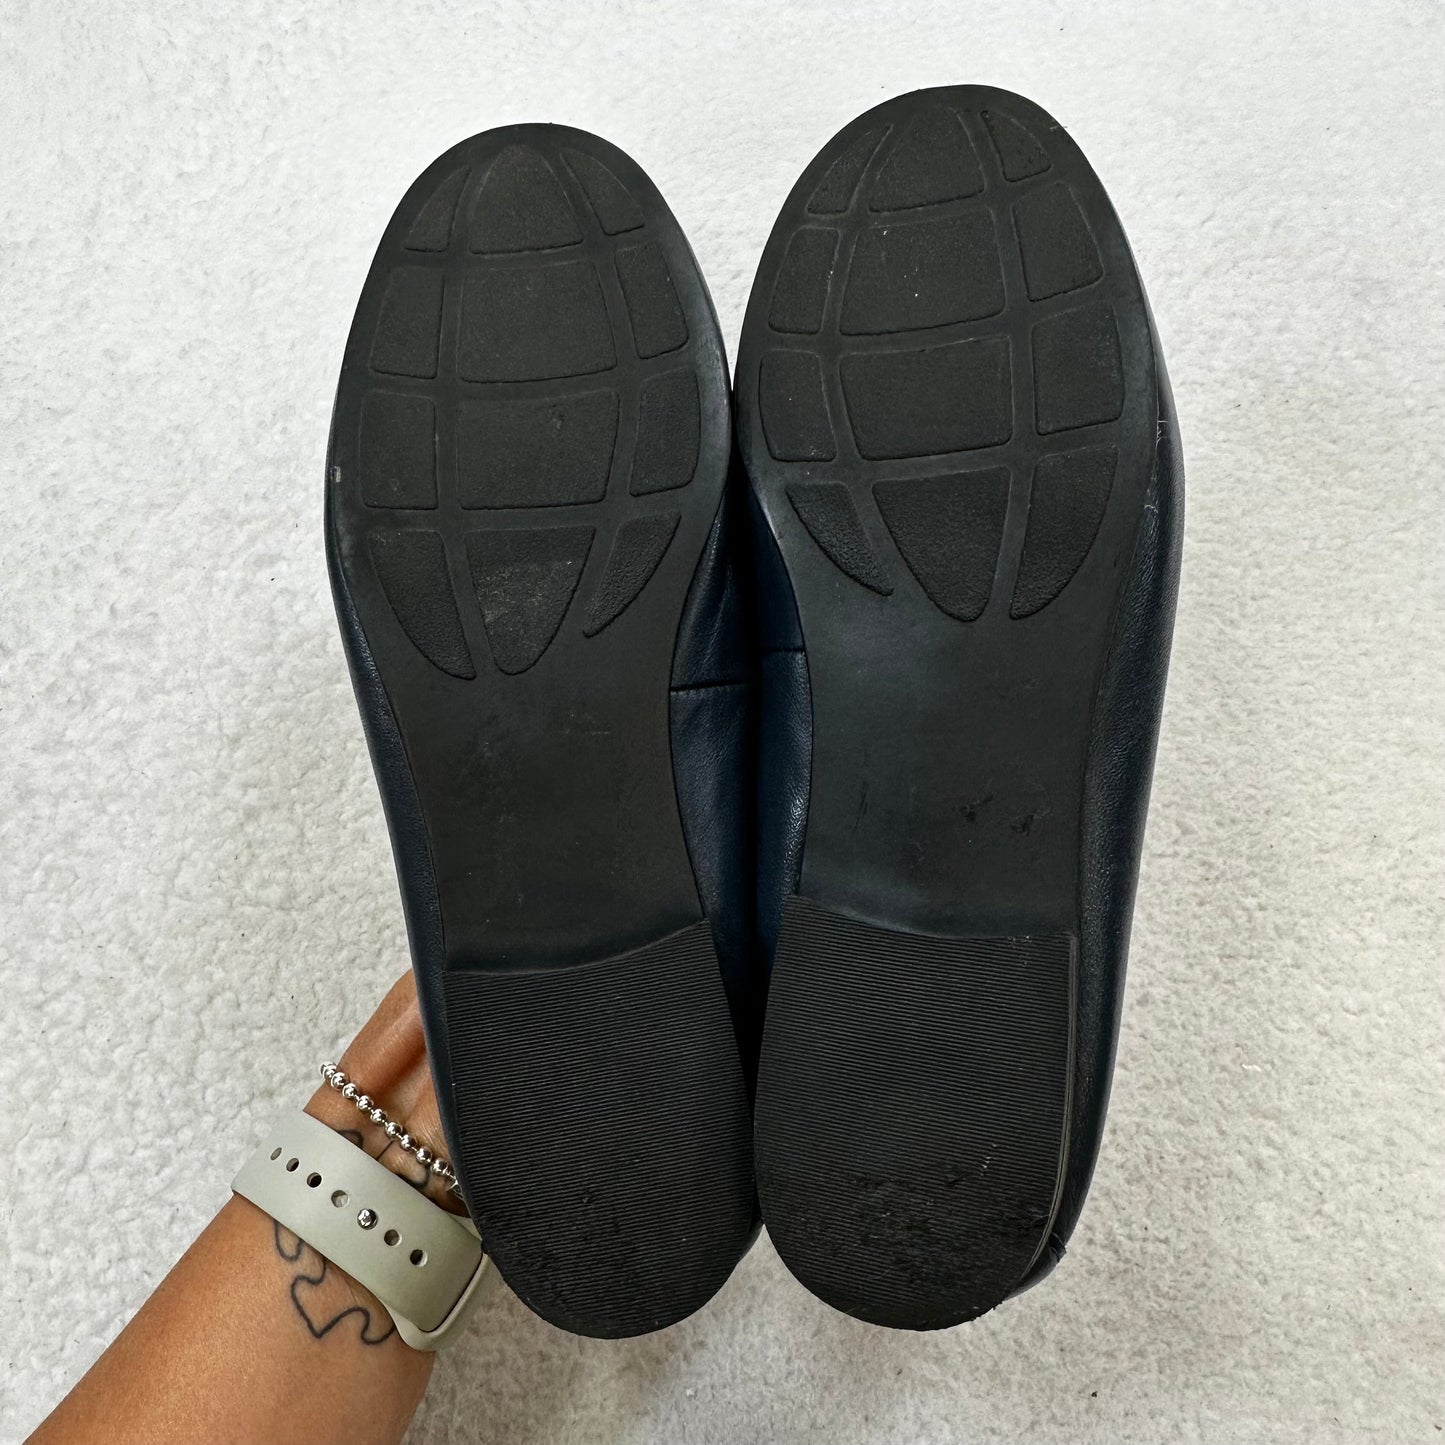 Navy Shoes Flats Ballet Naturalizer, Size 6.5